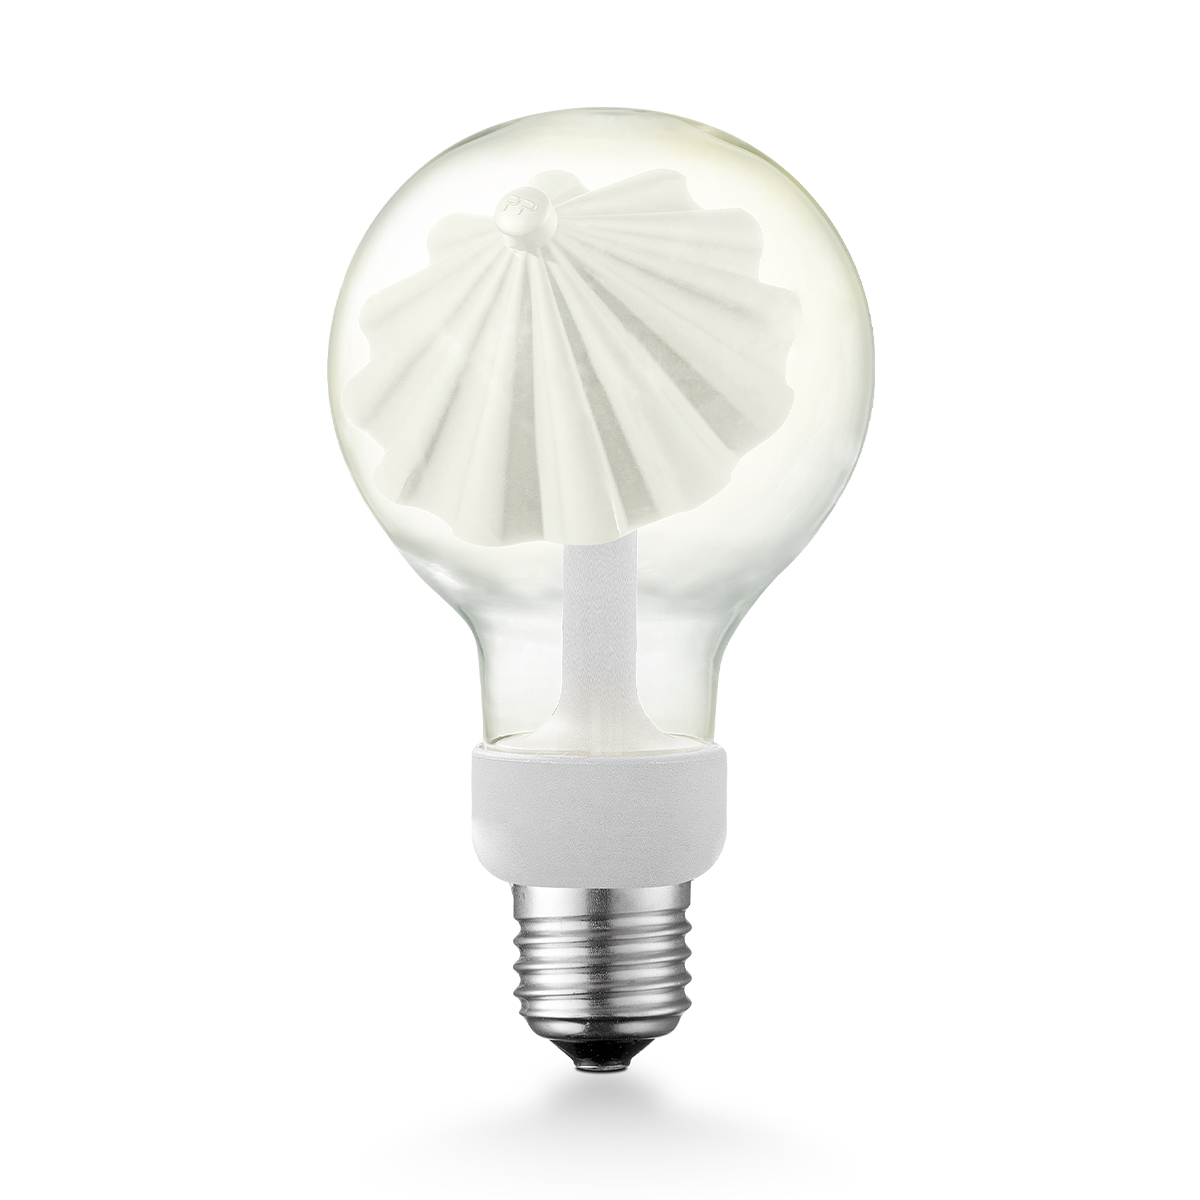 Tangla lighting - 0673-02-N - LED Light Bulb Move me - G80 3W Shell white - E27 / E26